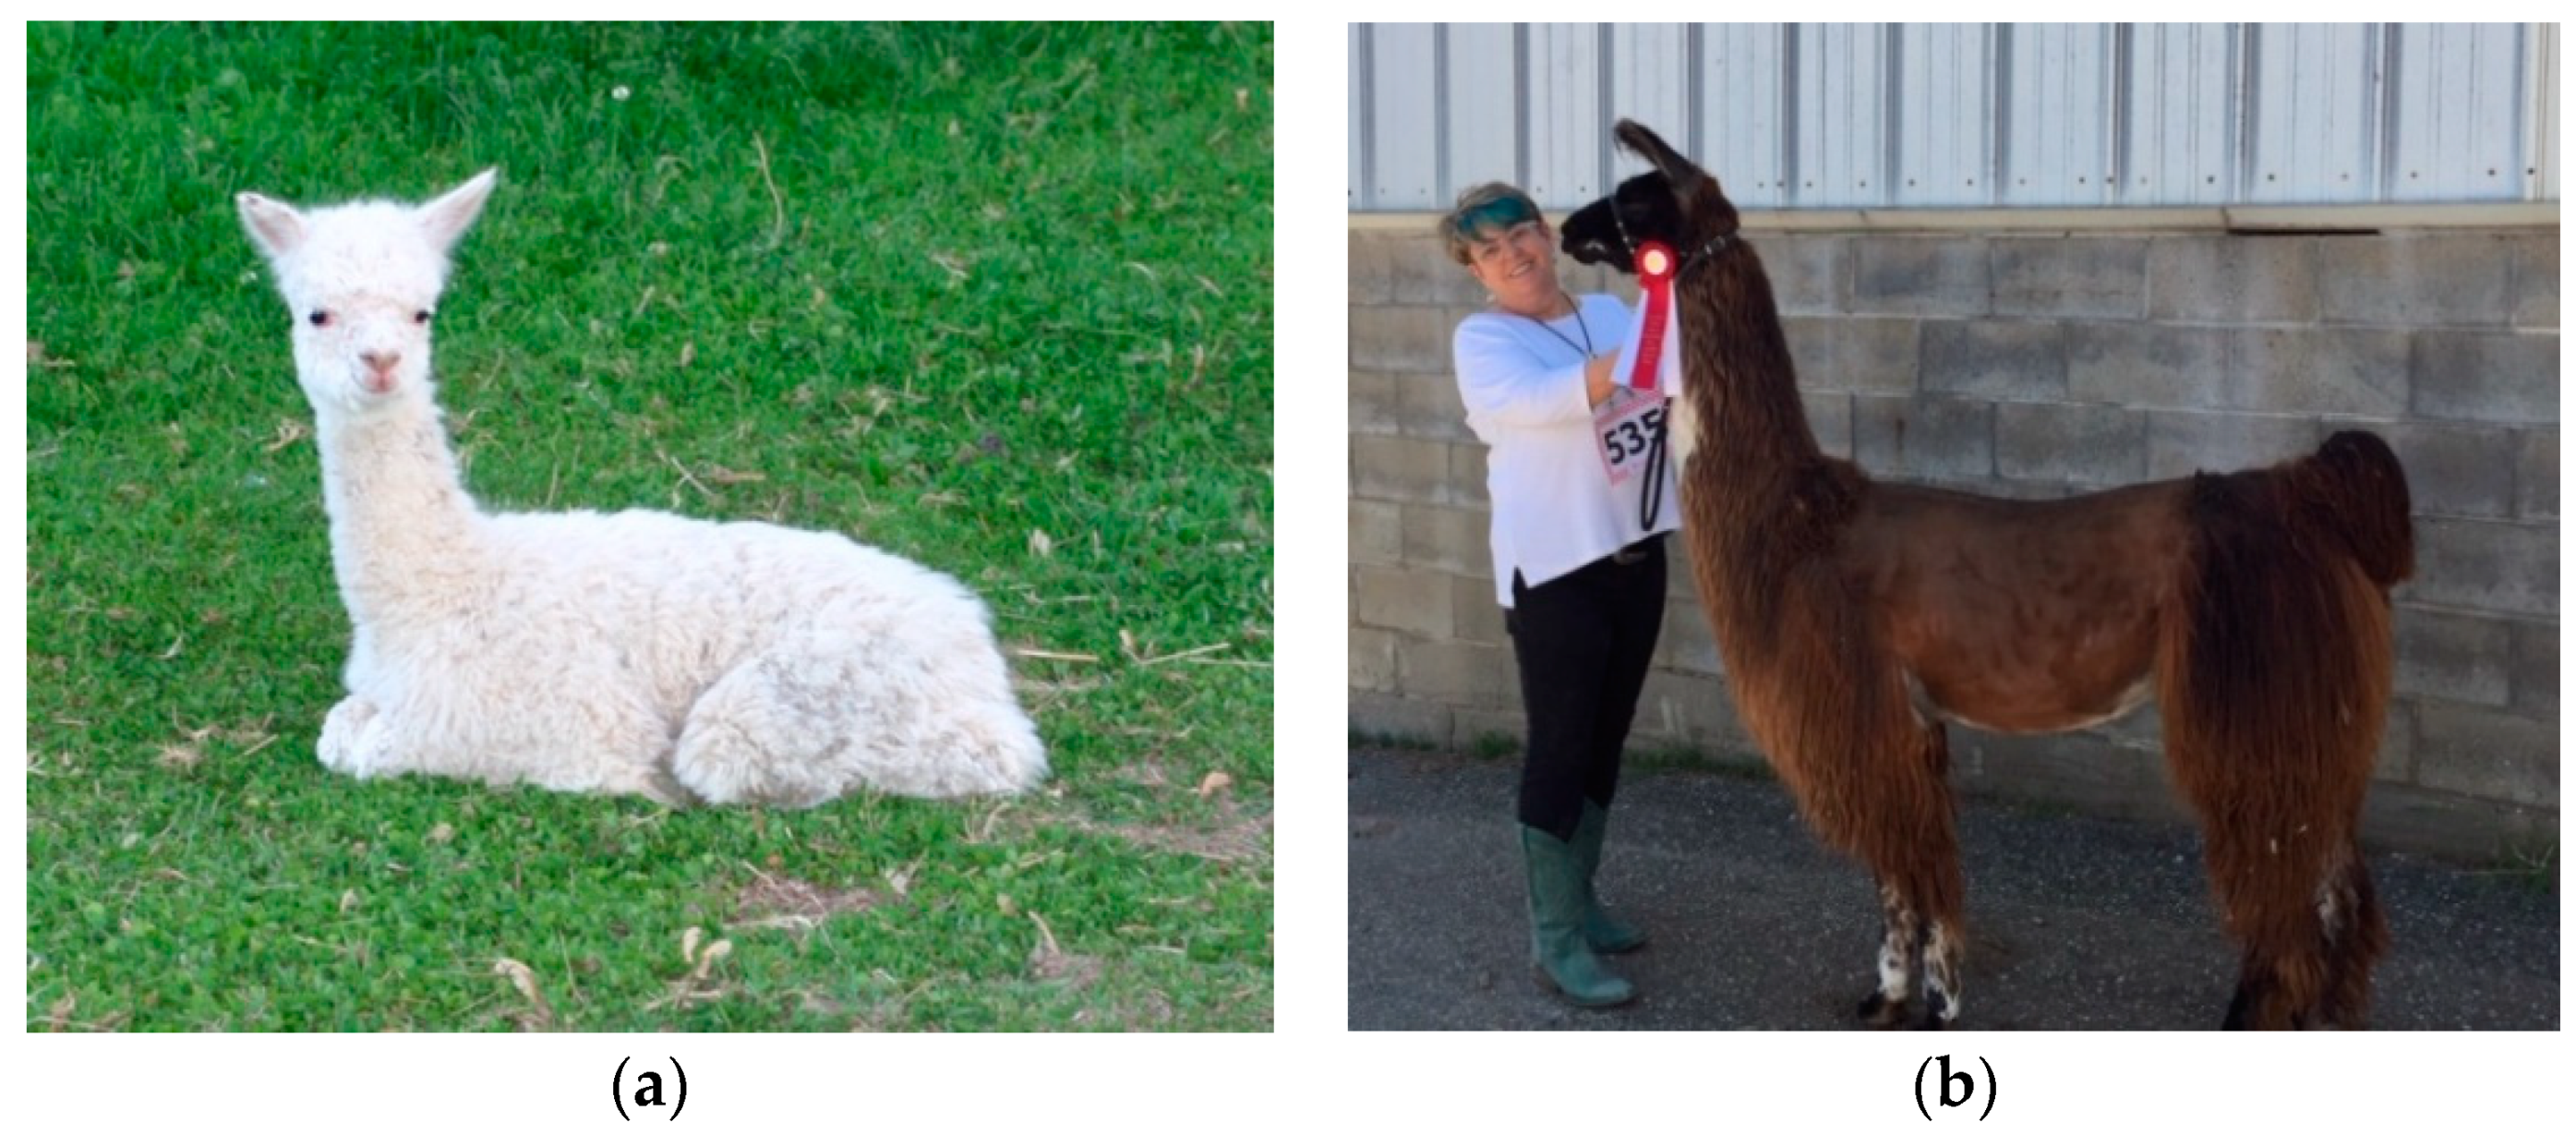 Fibers | Free Full-Text | Flammability Characteristics of Animal Fibers:  Single Breed Wools, Alpaca/Wool, and Llama/Wool Blends